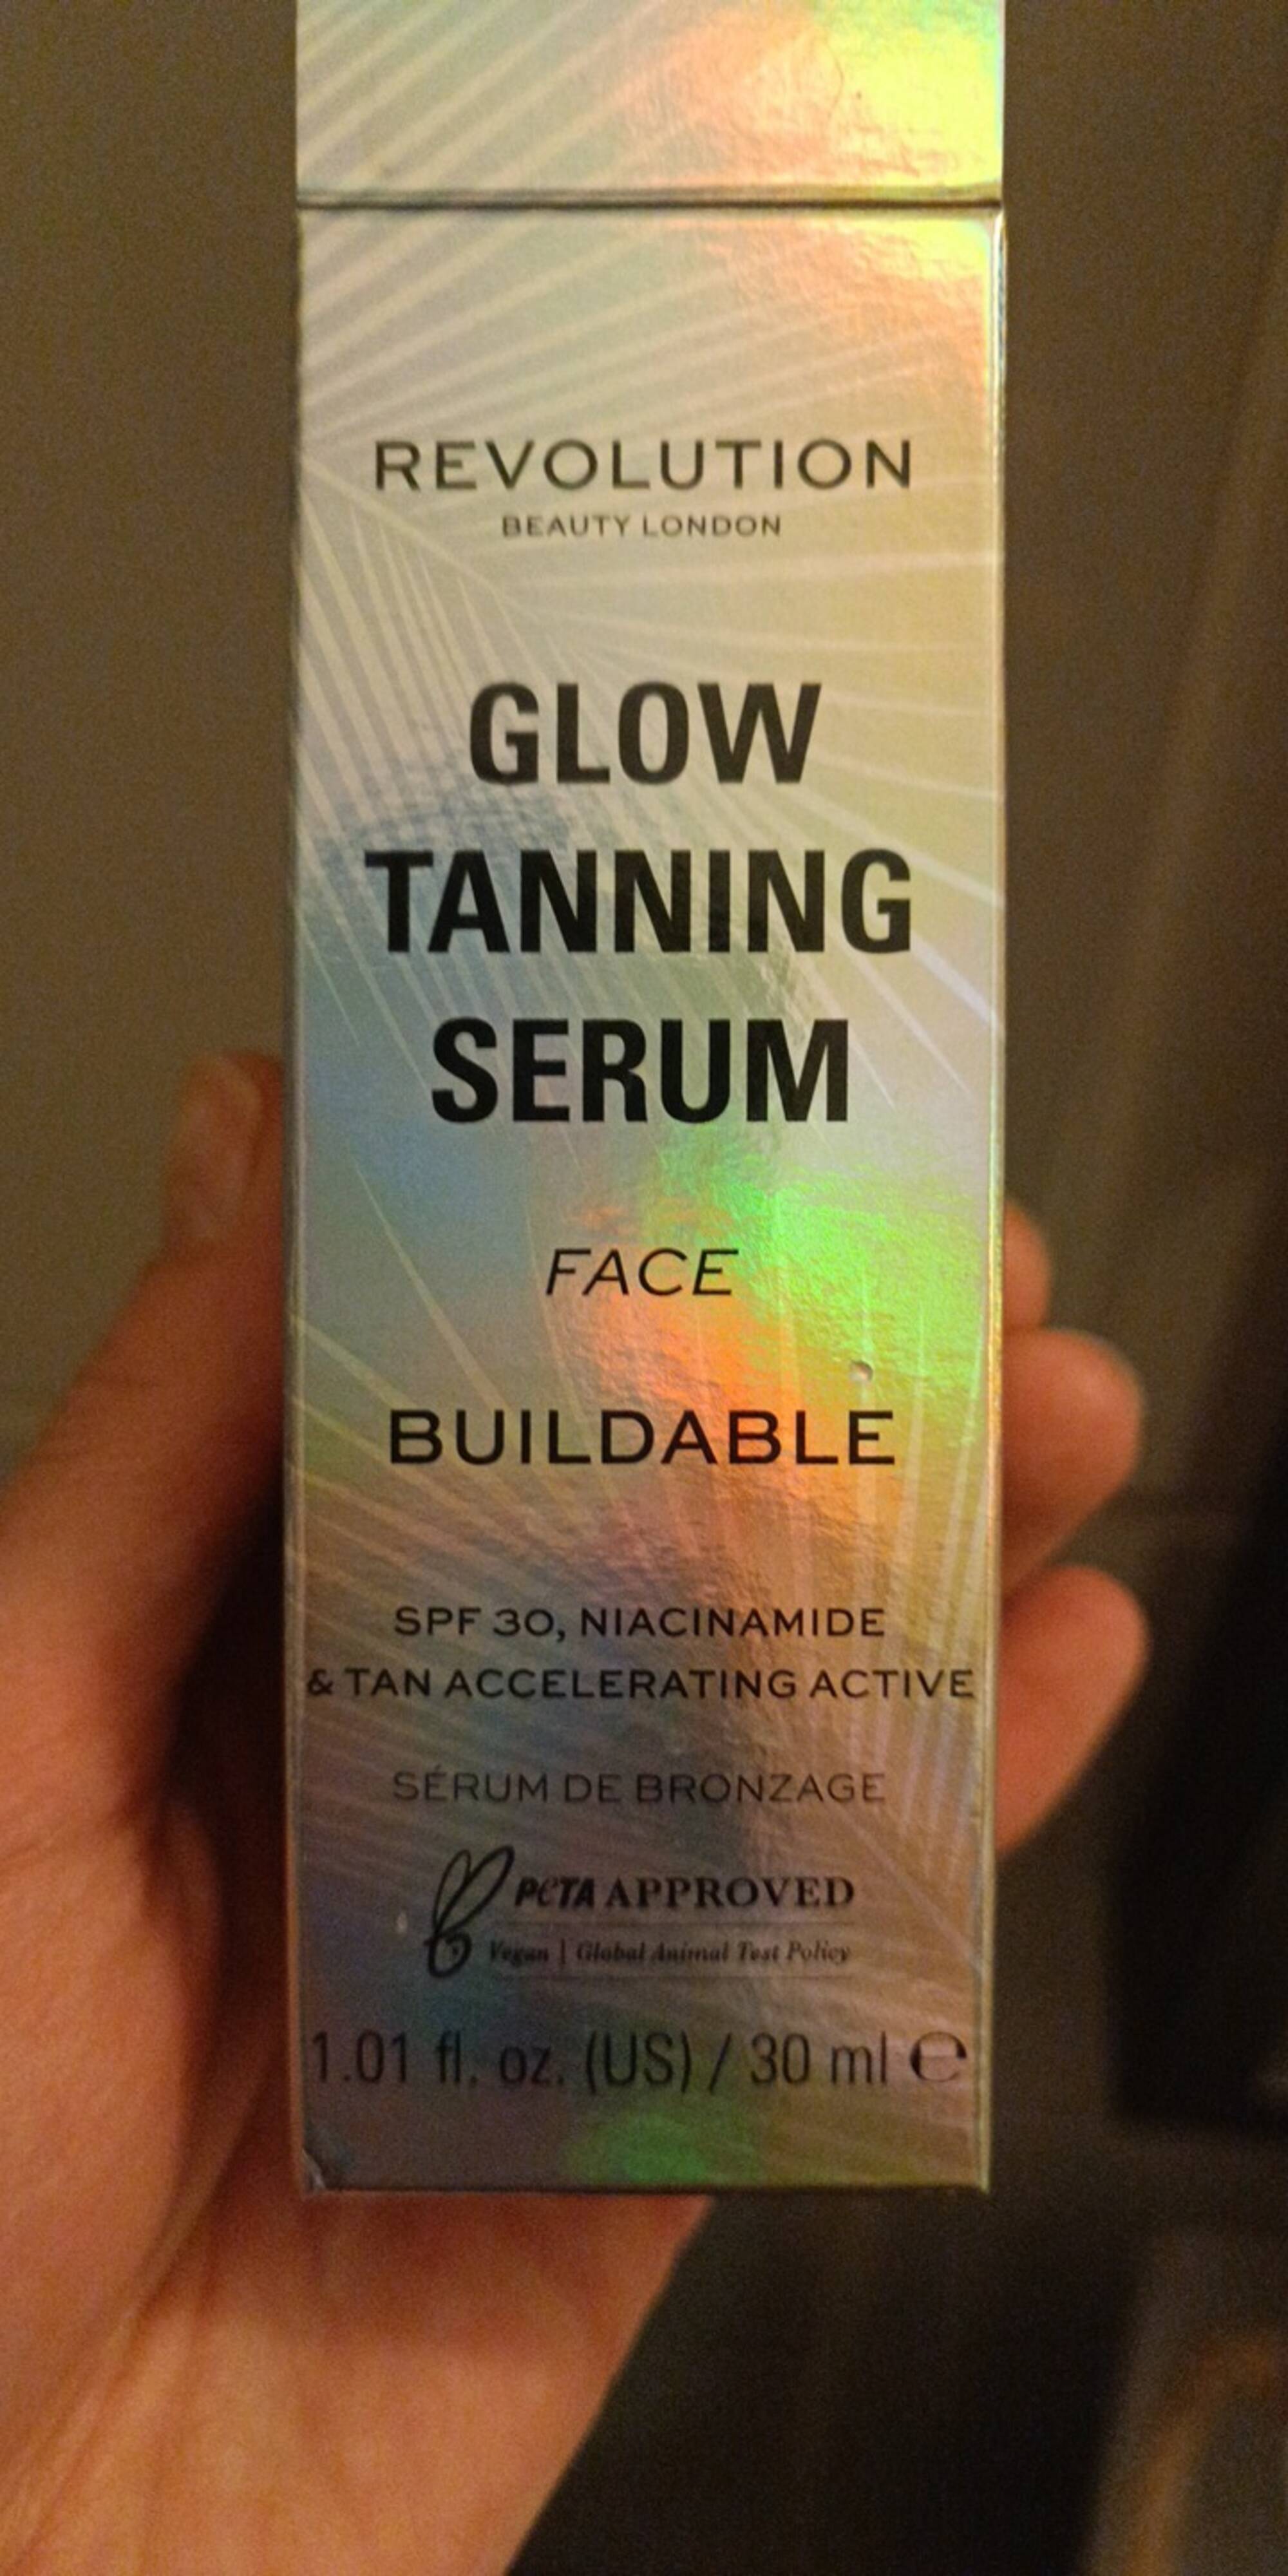 REVOLUTION - Glow tanning serum SPF 30